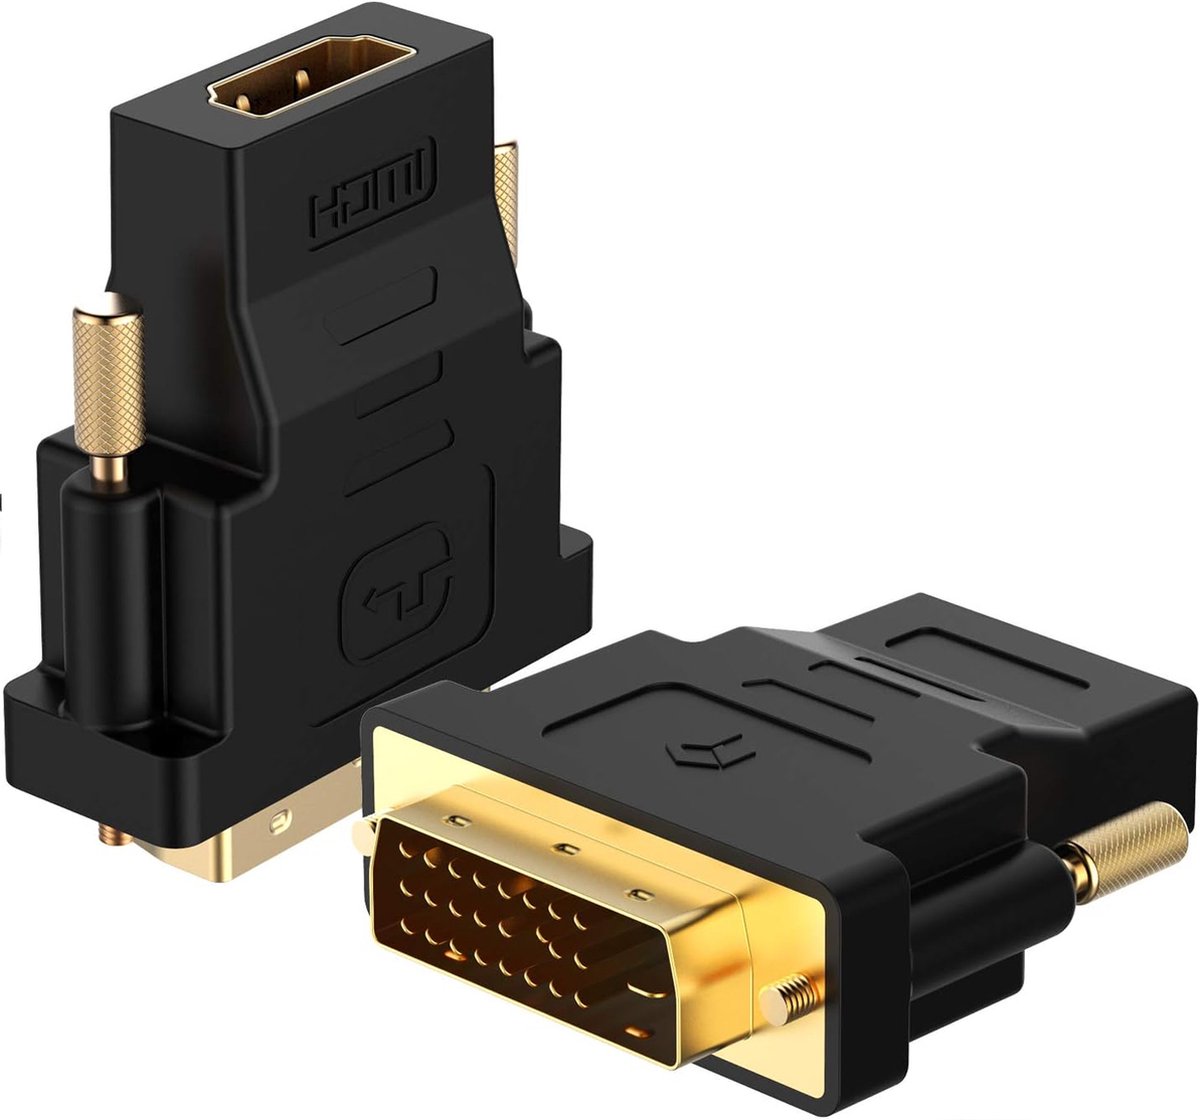 Qost - HDMI naar DVI Adapter / Converter - 24+5 Pin - Qost®